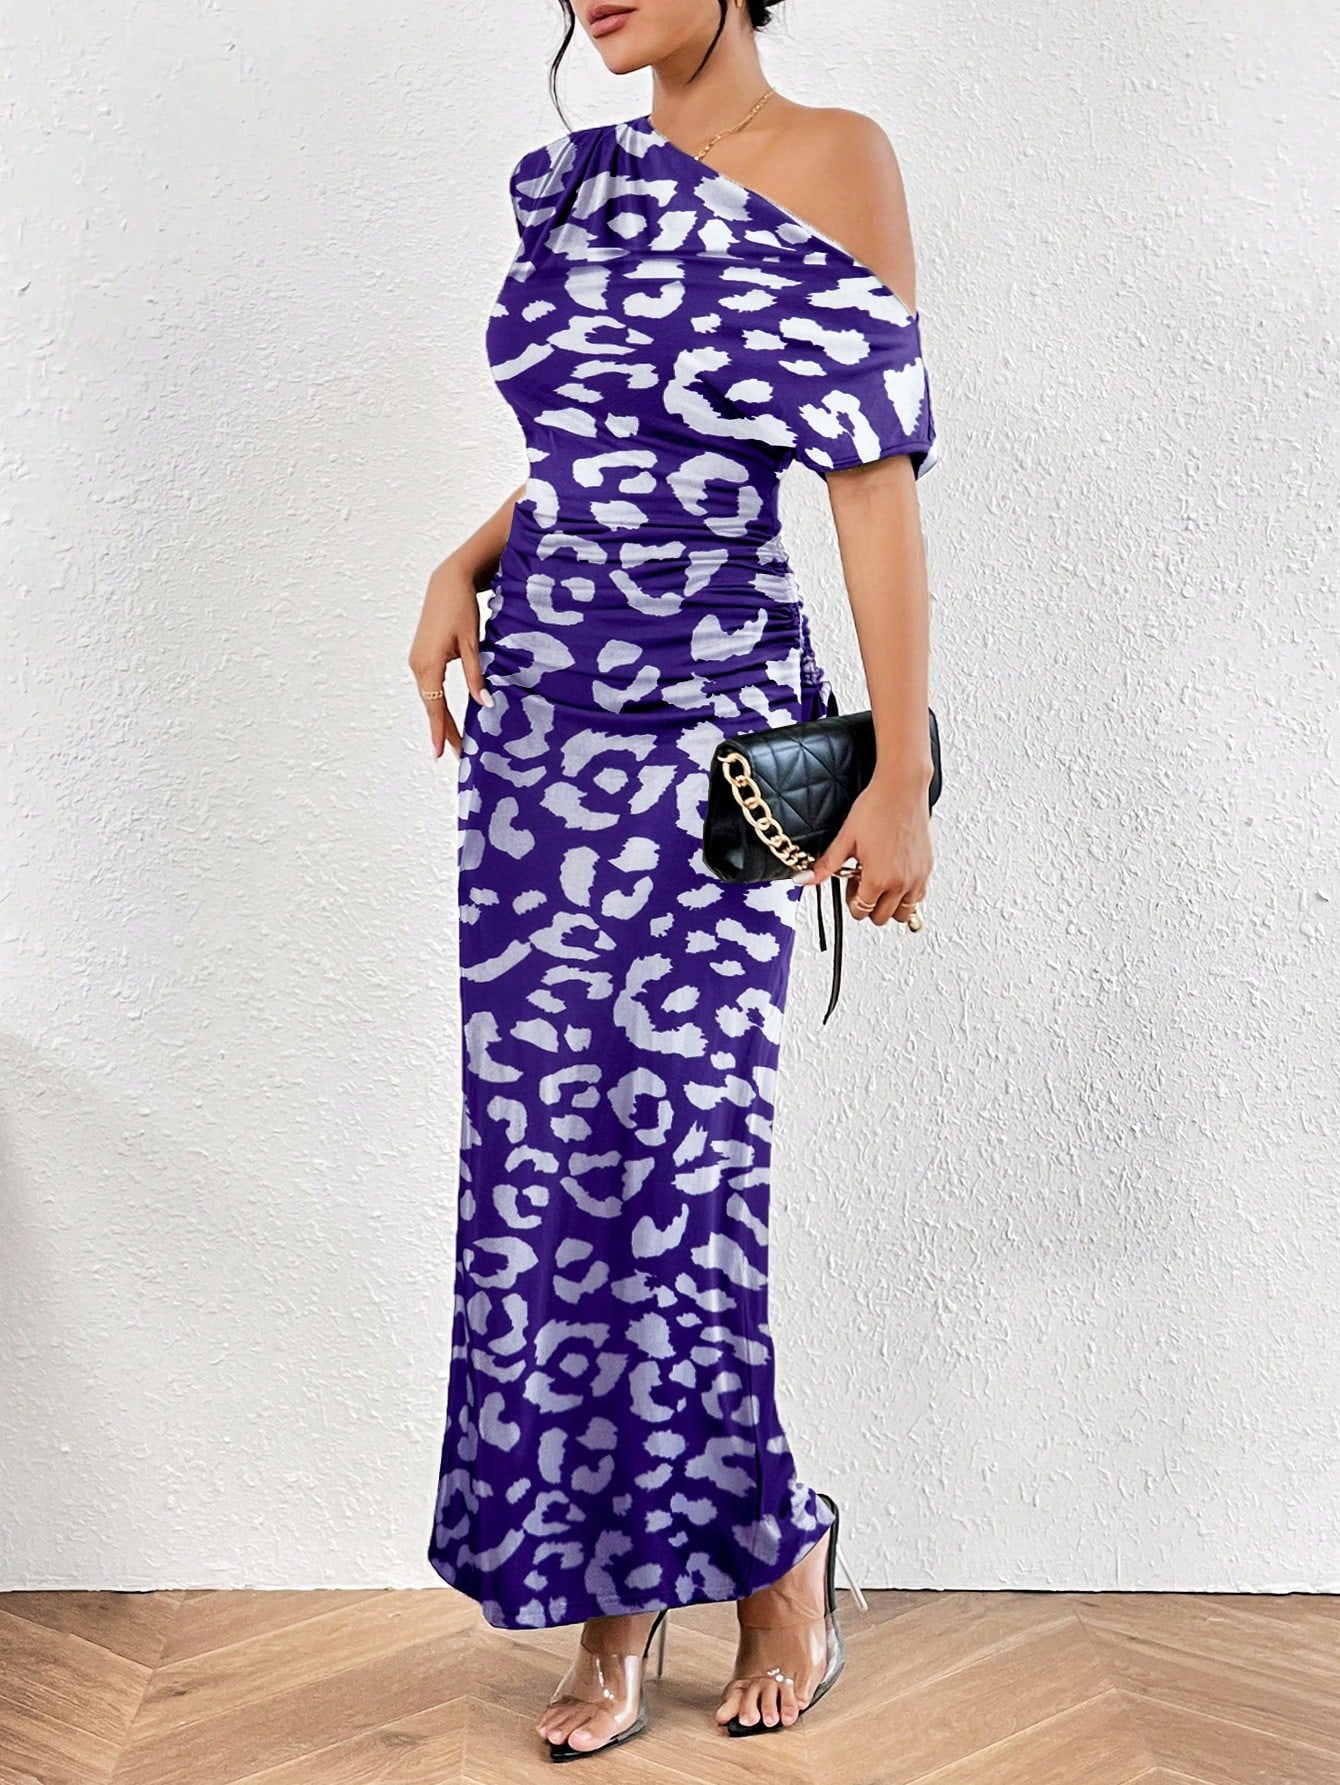 Leopard Print Asymmetrical Neck Ruched Side Mermaid Dress